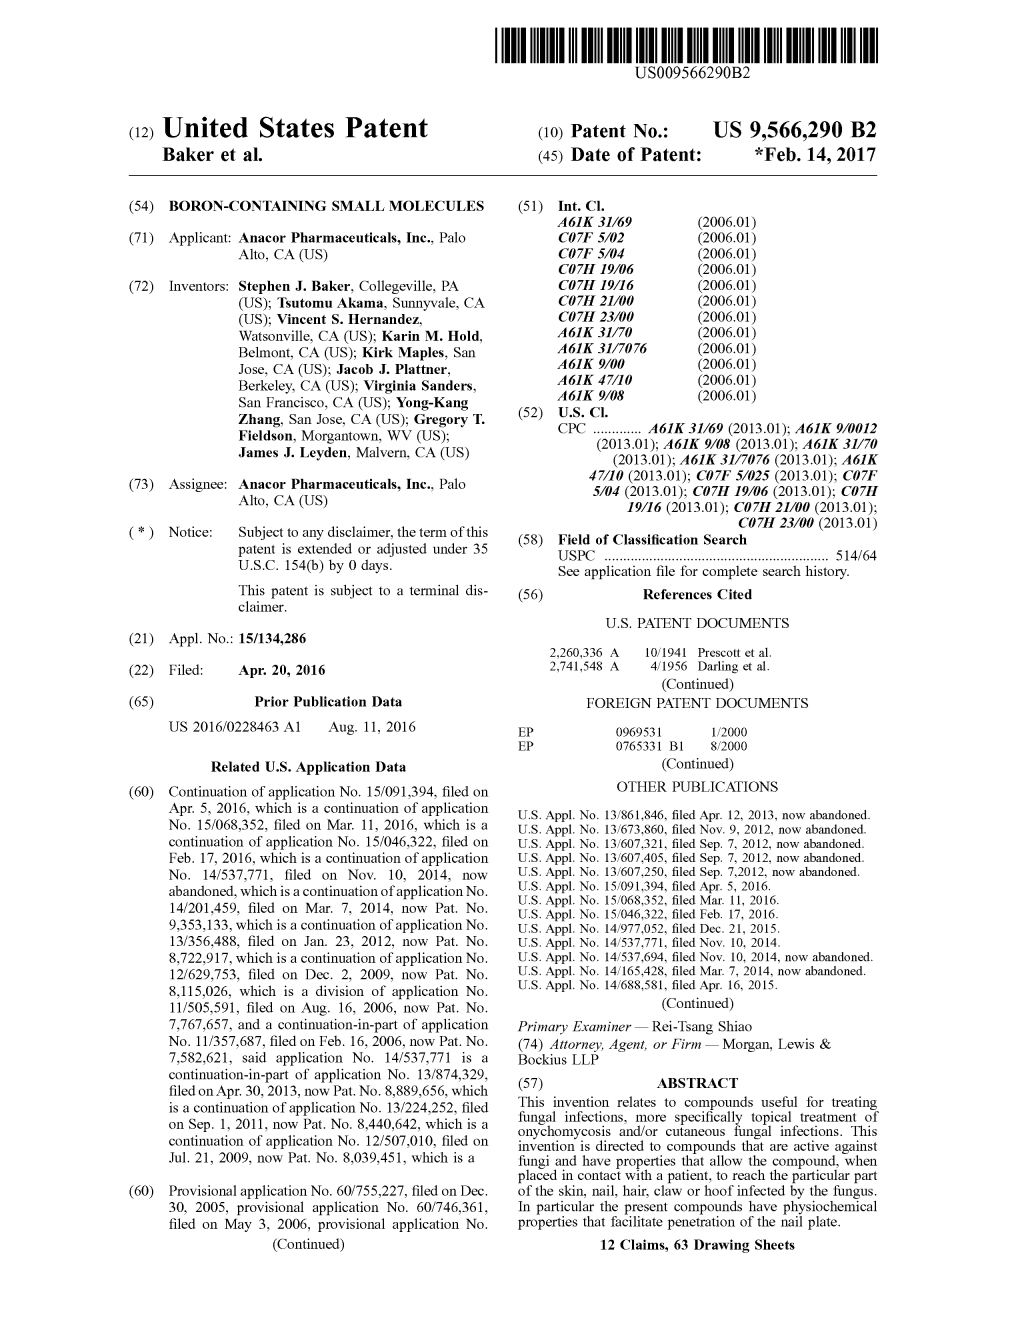 (12) United States Patent (10) Patent No.: US 9,566.290 B2 Baker Et Al